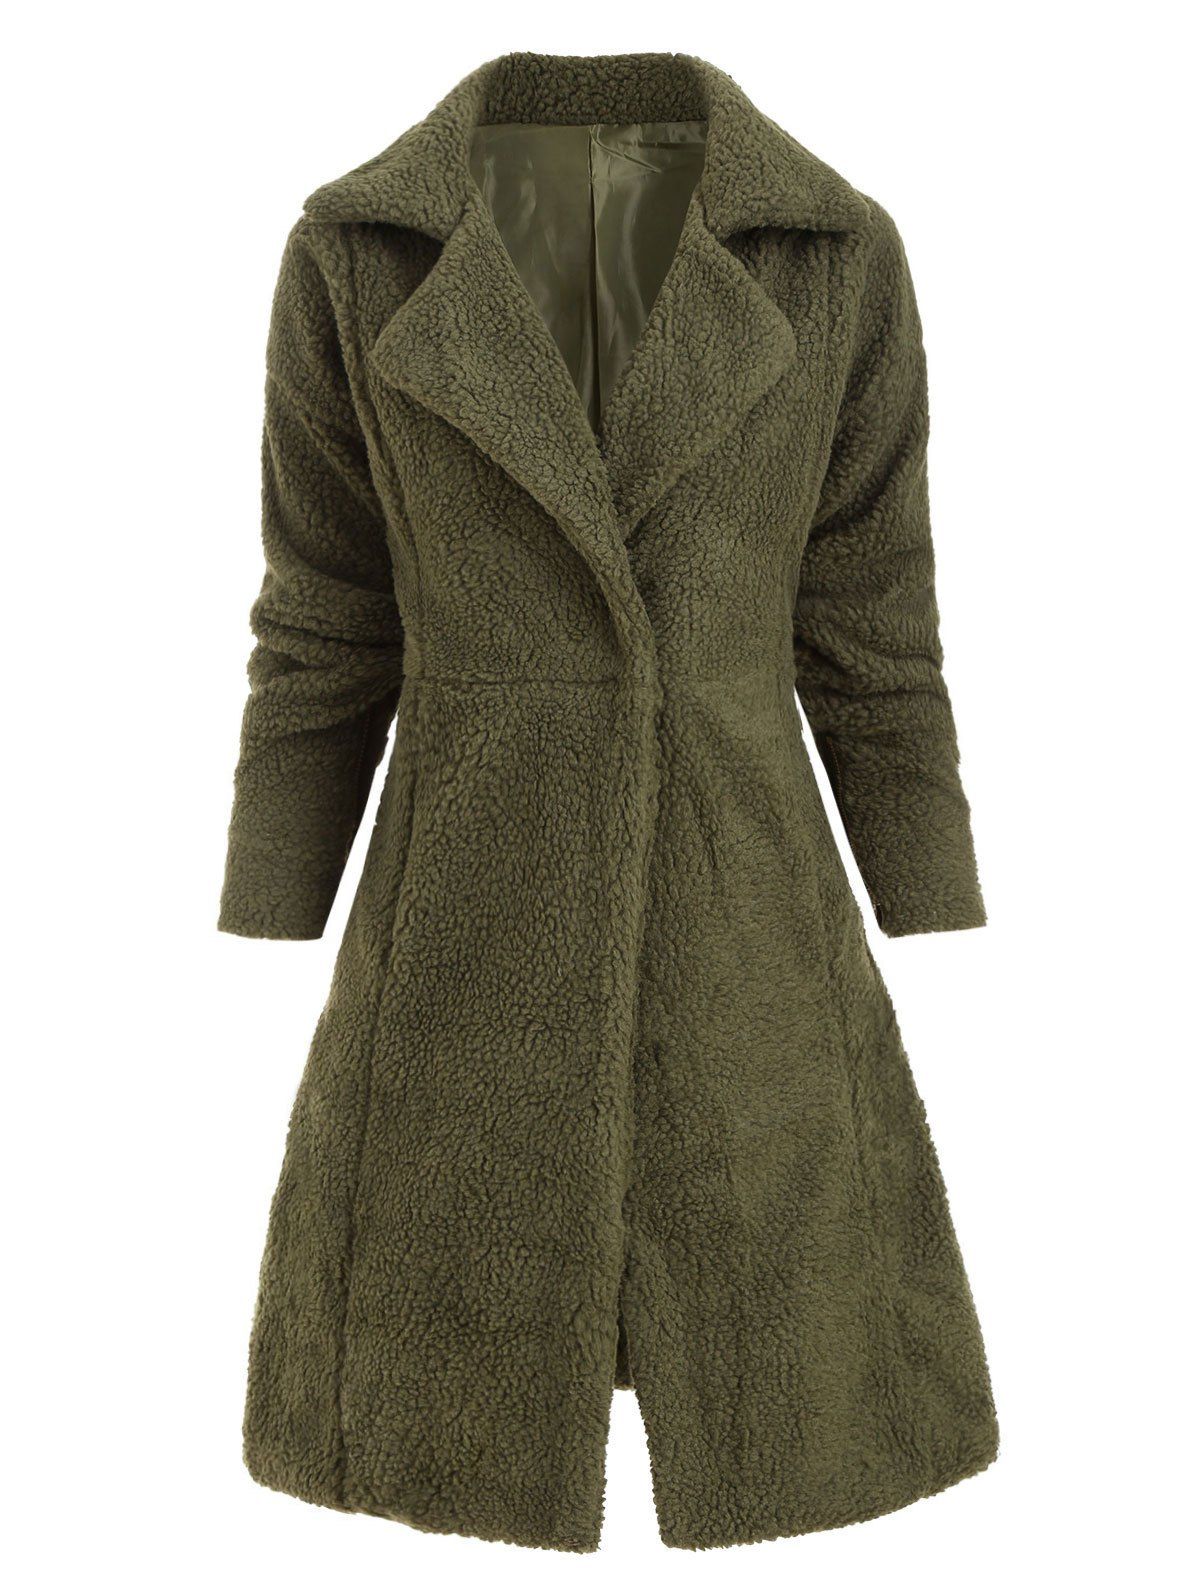 Drop Shoulder Zip Embellished Longline Teddy Coat - DARK FOREST GREEN XL